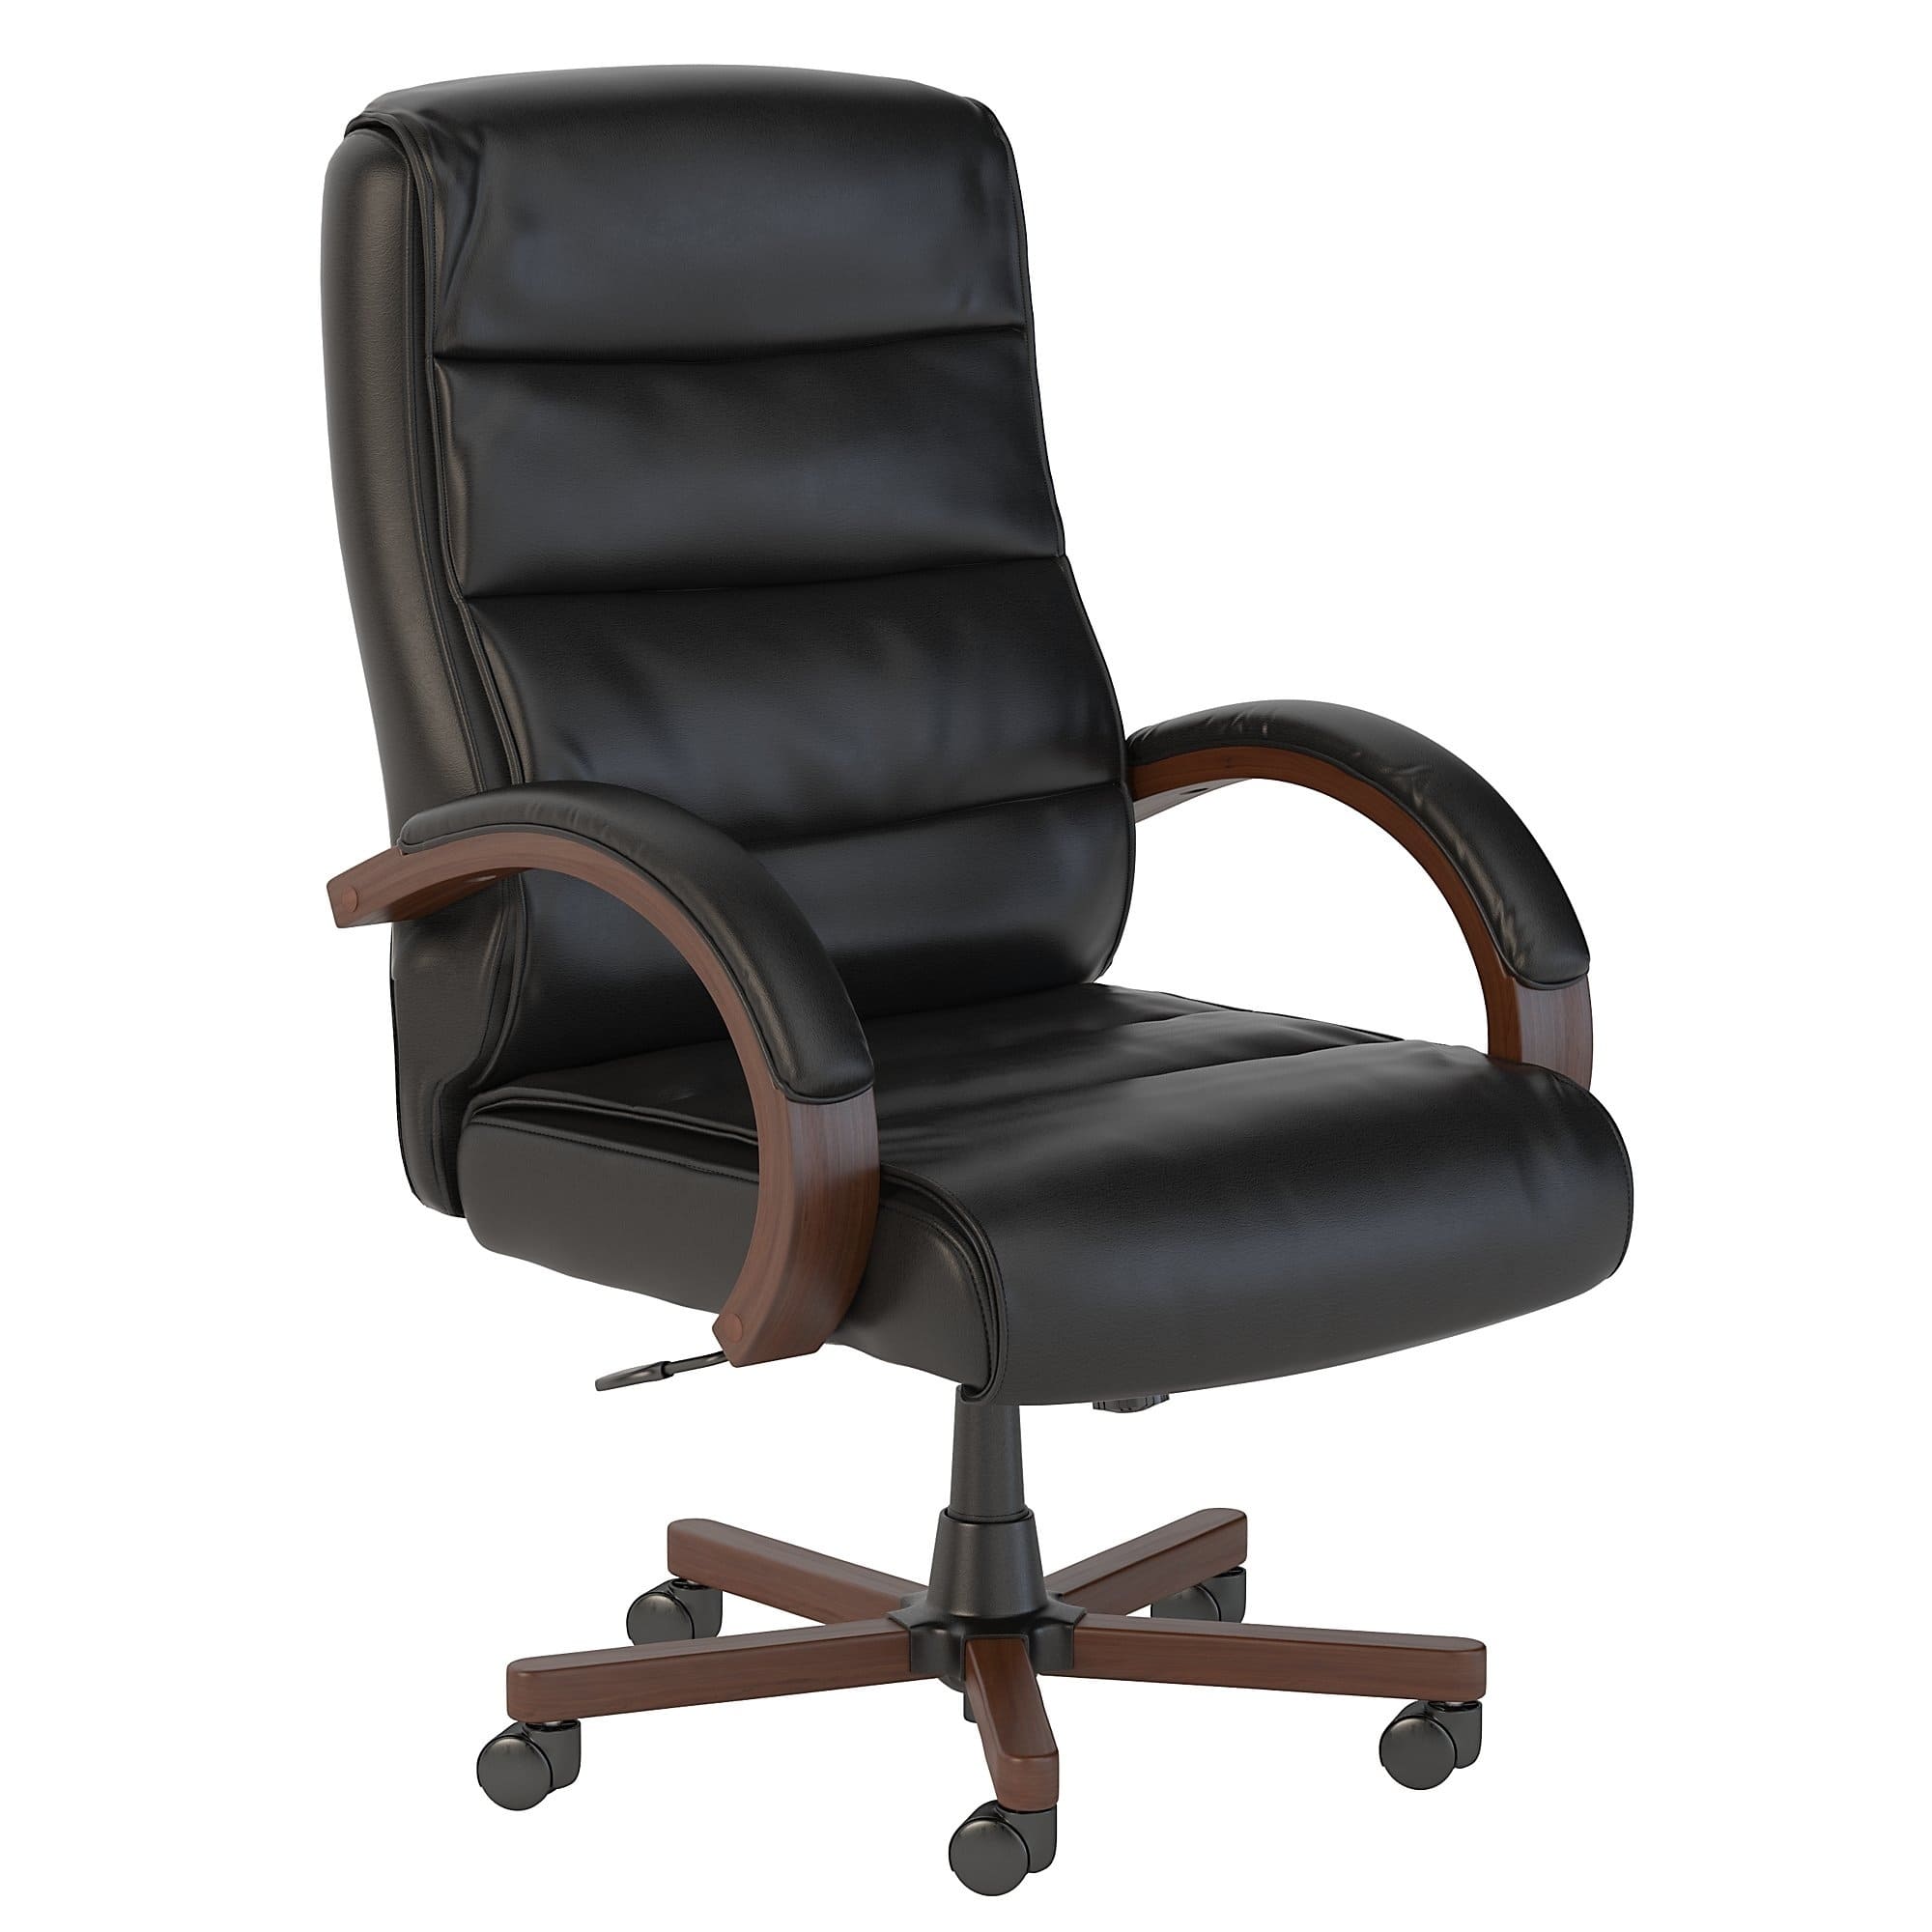 Soft Sense High Back Leather Executive Office Chair With Wood Arms C772d1a6 Cee5 4b71 867d Eb5d041c8a59 ?impolicy=medium